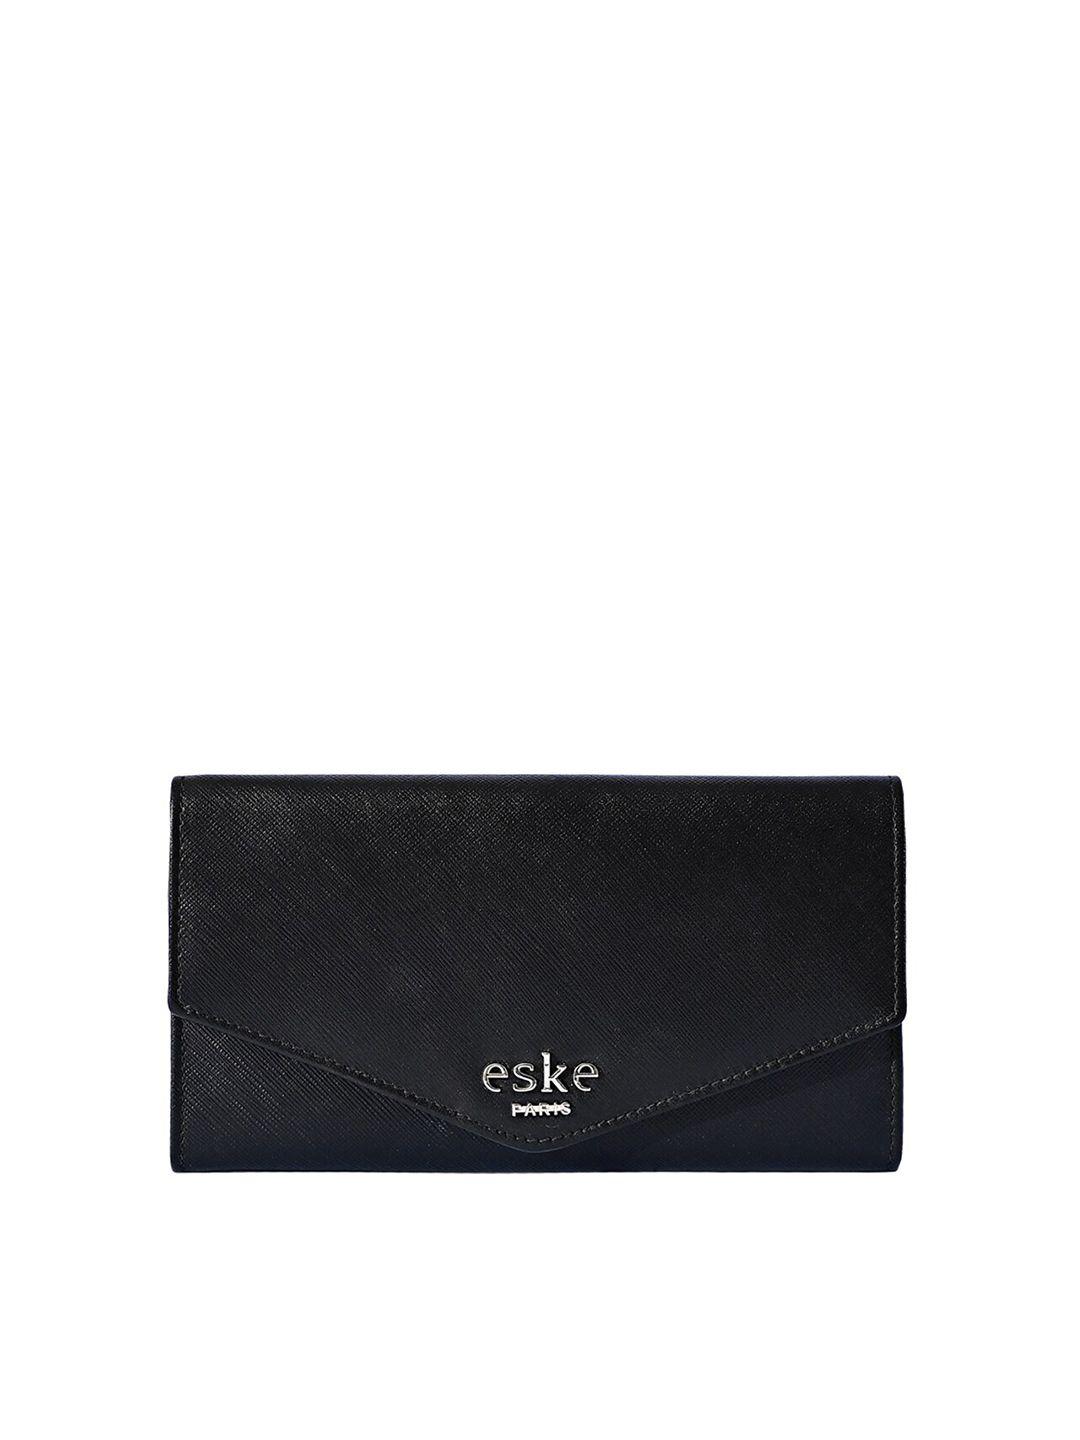 eske women black textured leather three fold wallet